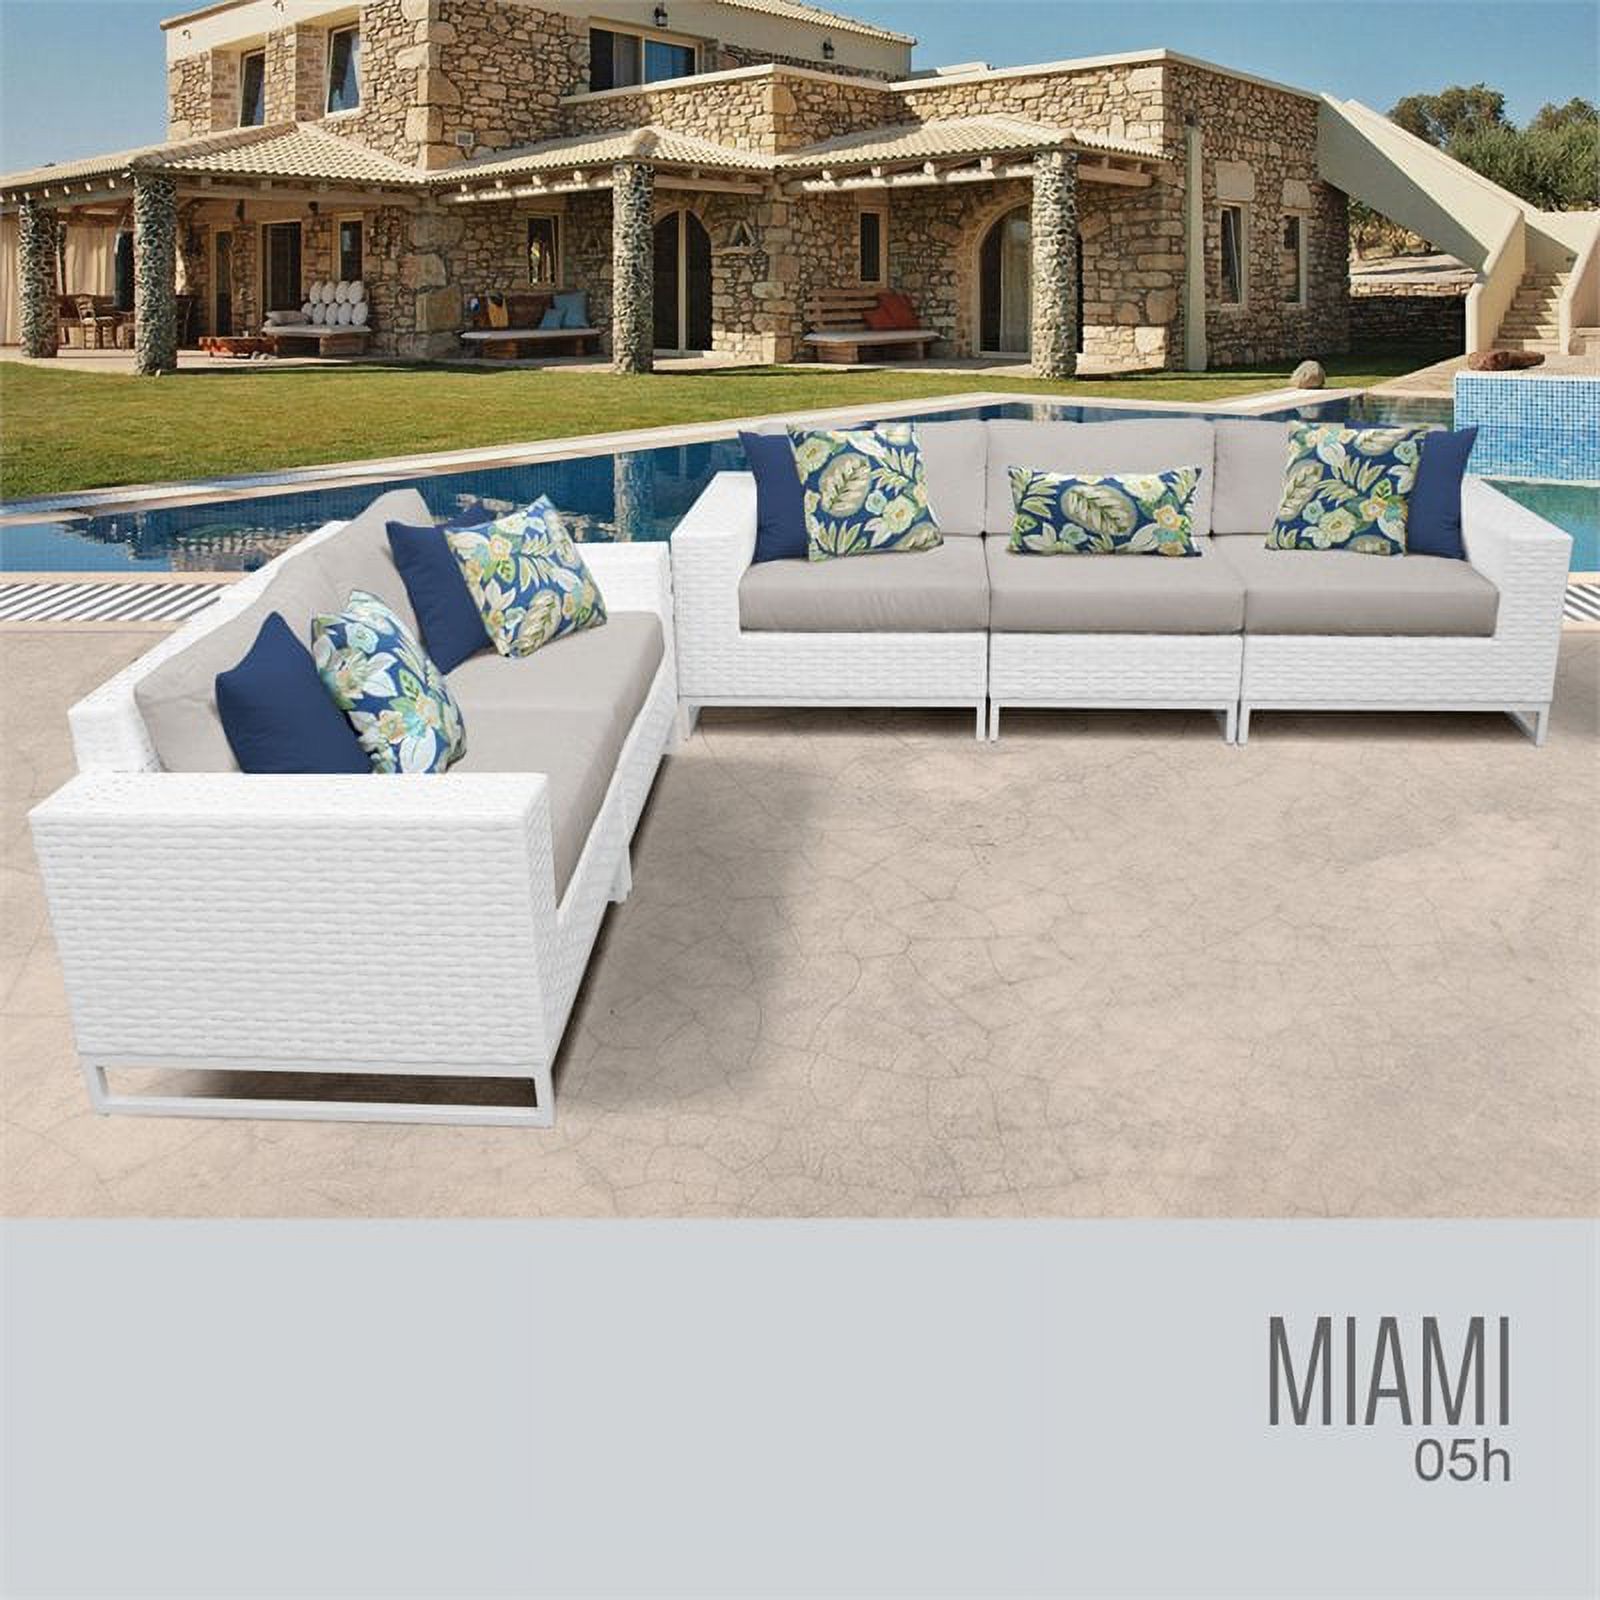 TK Classic Miami 5 Piece Wicker Patio Sofa Set in Beige - image 1 of 2